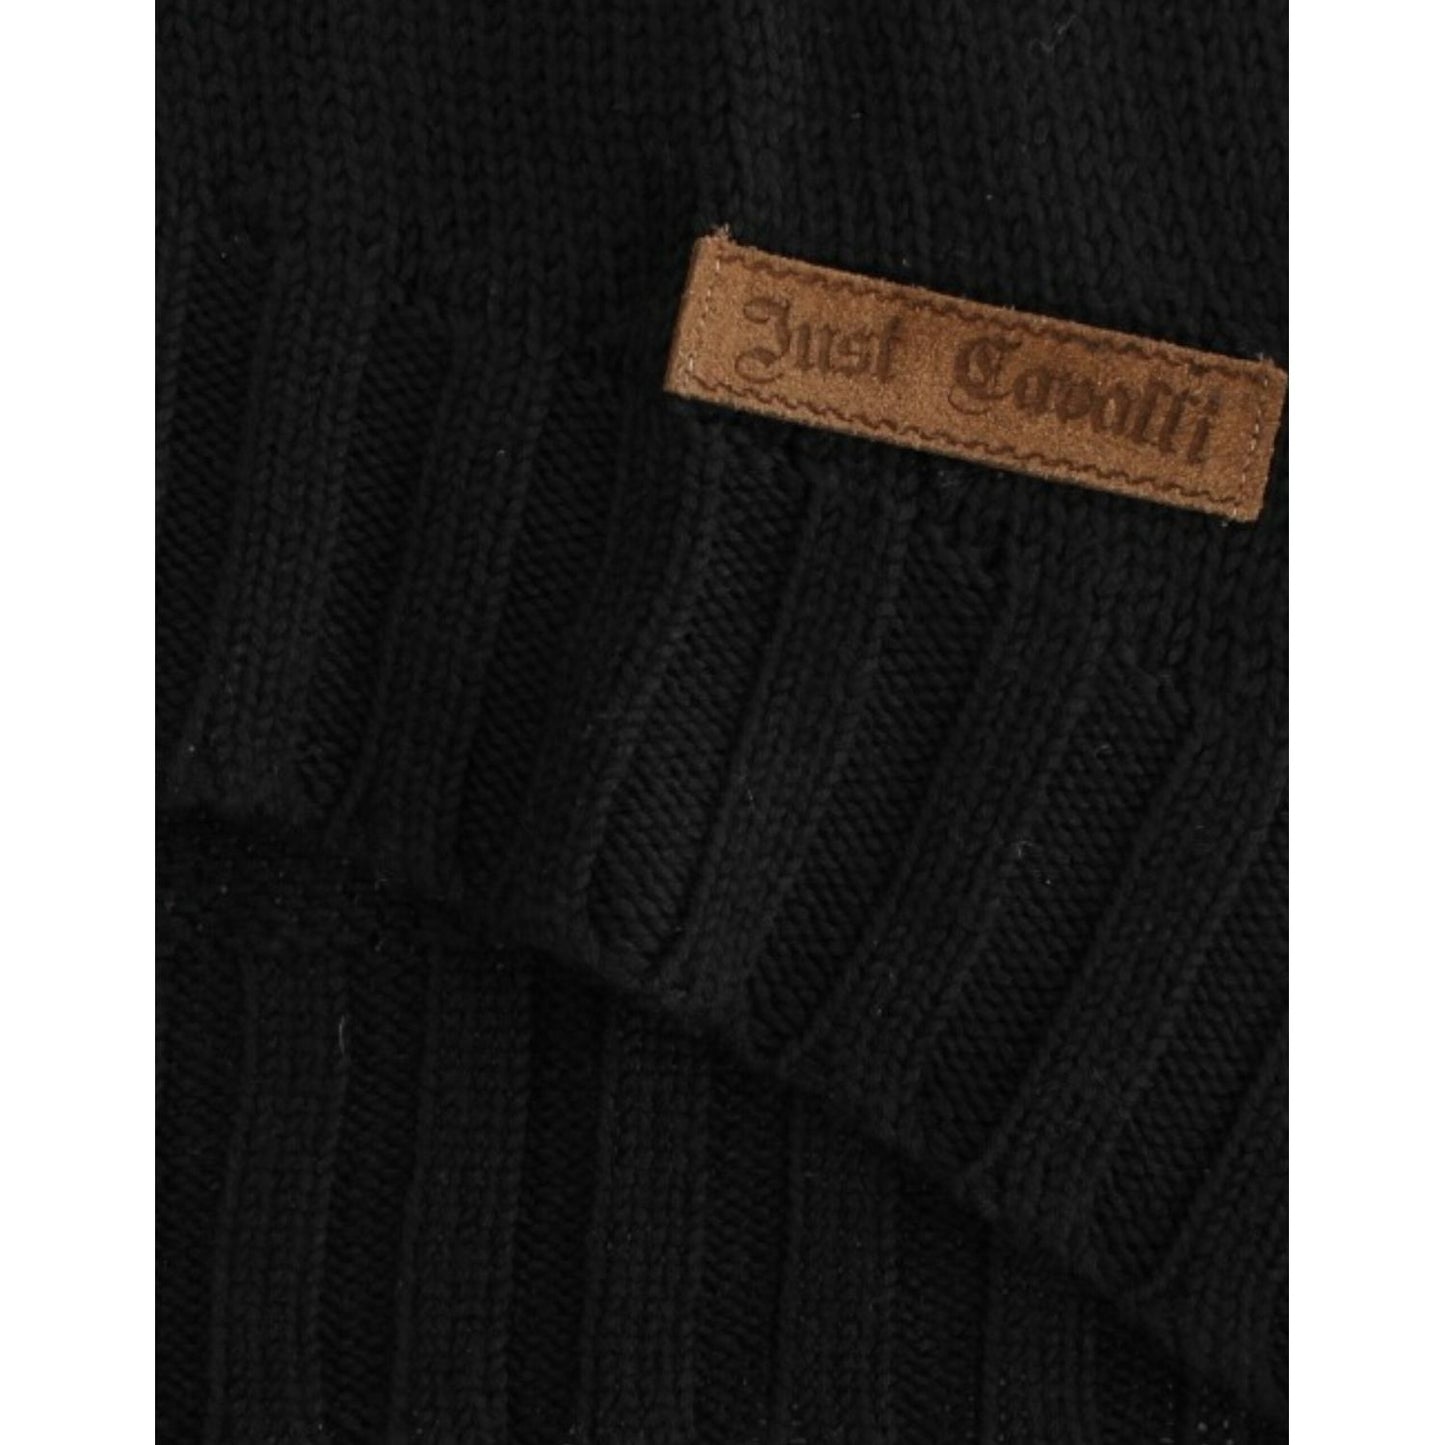 Cavalli Alluring Black Knitted Crew Neck Sweater black-knitted-wool-sweater 8739-black-knitted-wool-sweater-6-scaled-777b8370-335.jpg